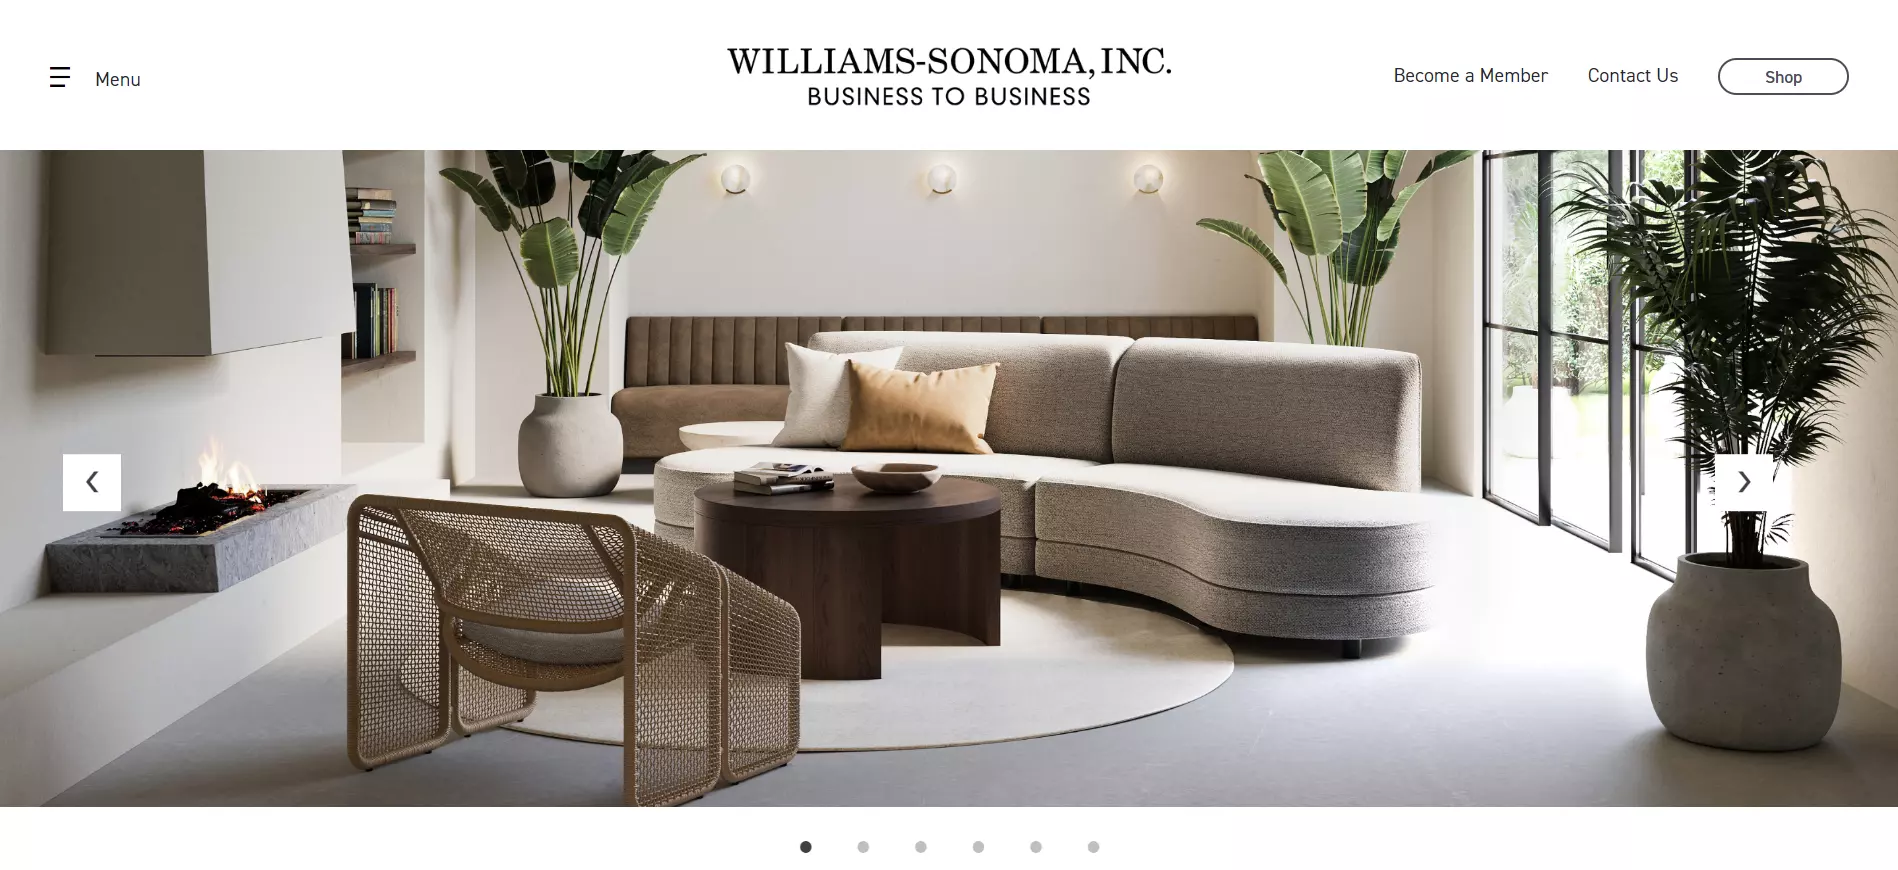 Williams Sonoma Inc Landing Page